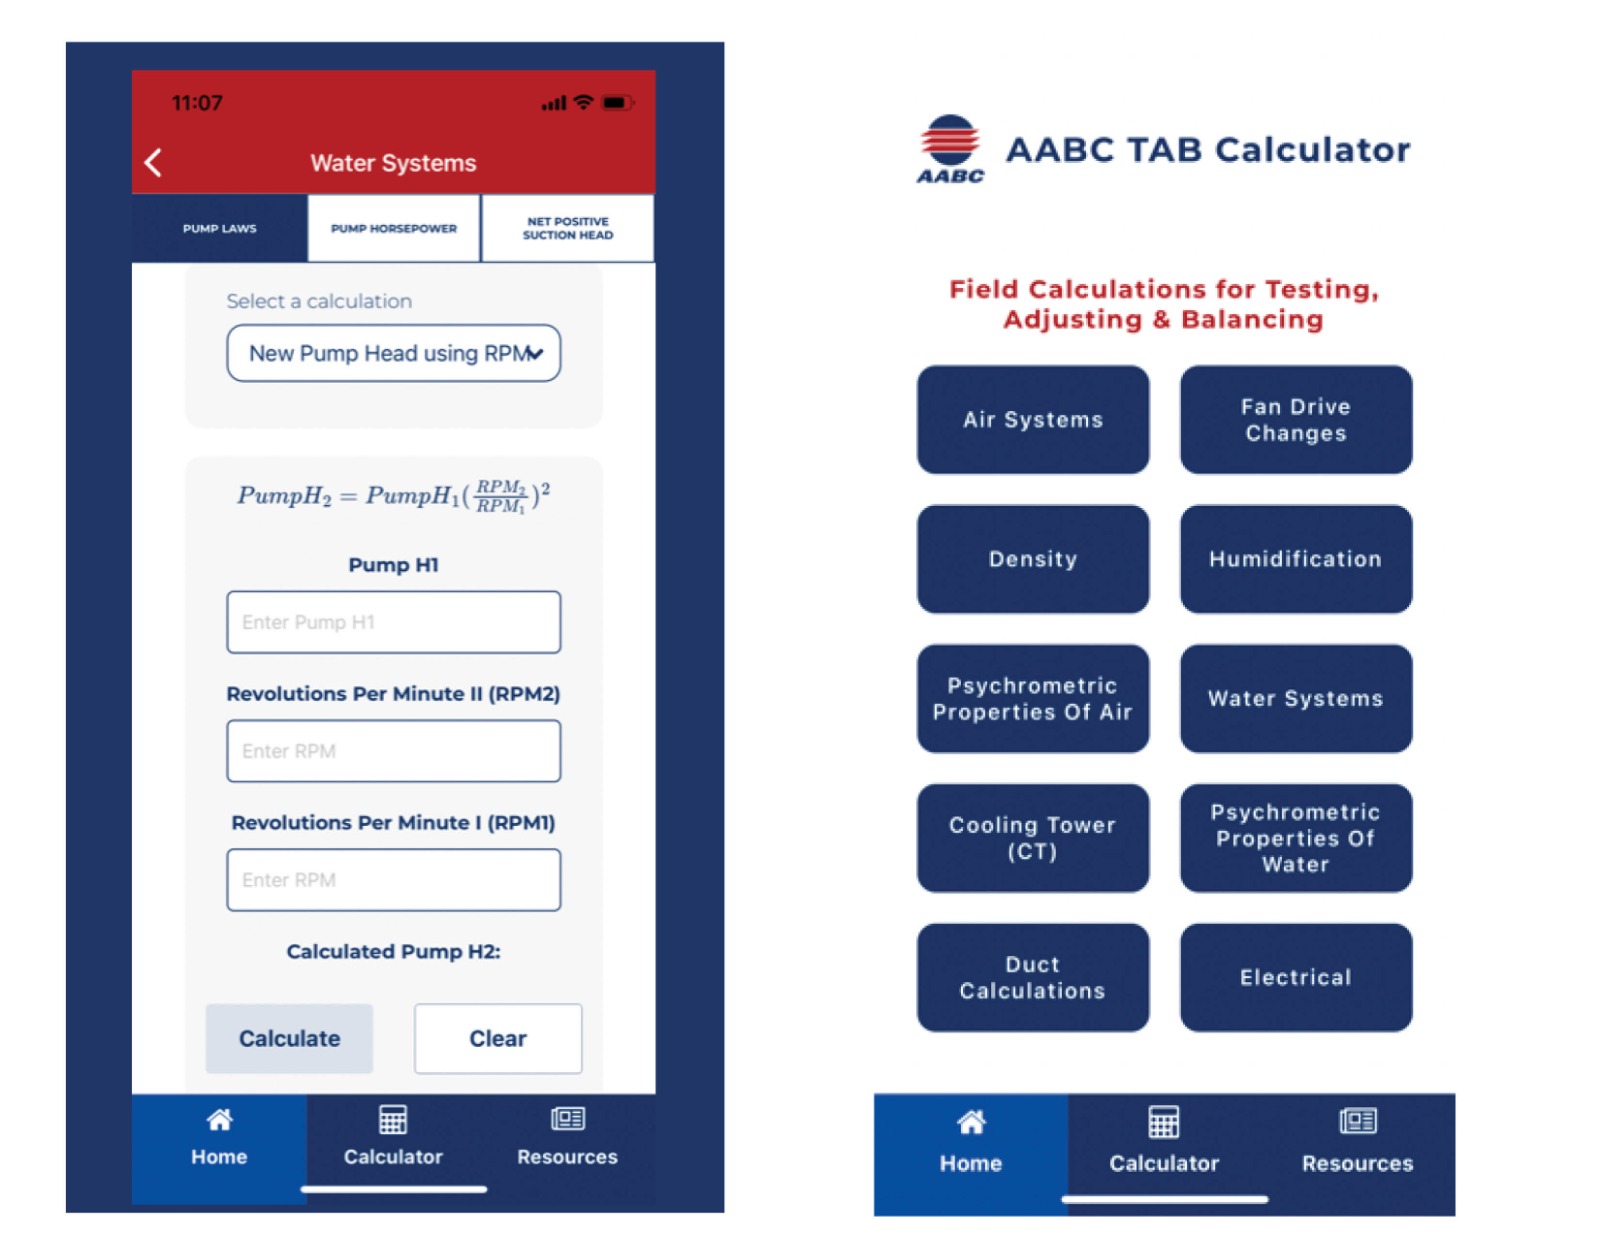 aabc calculator app image